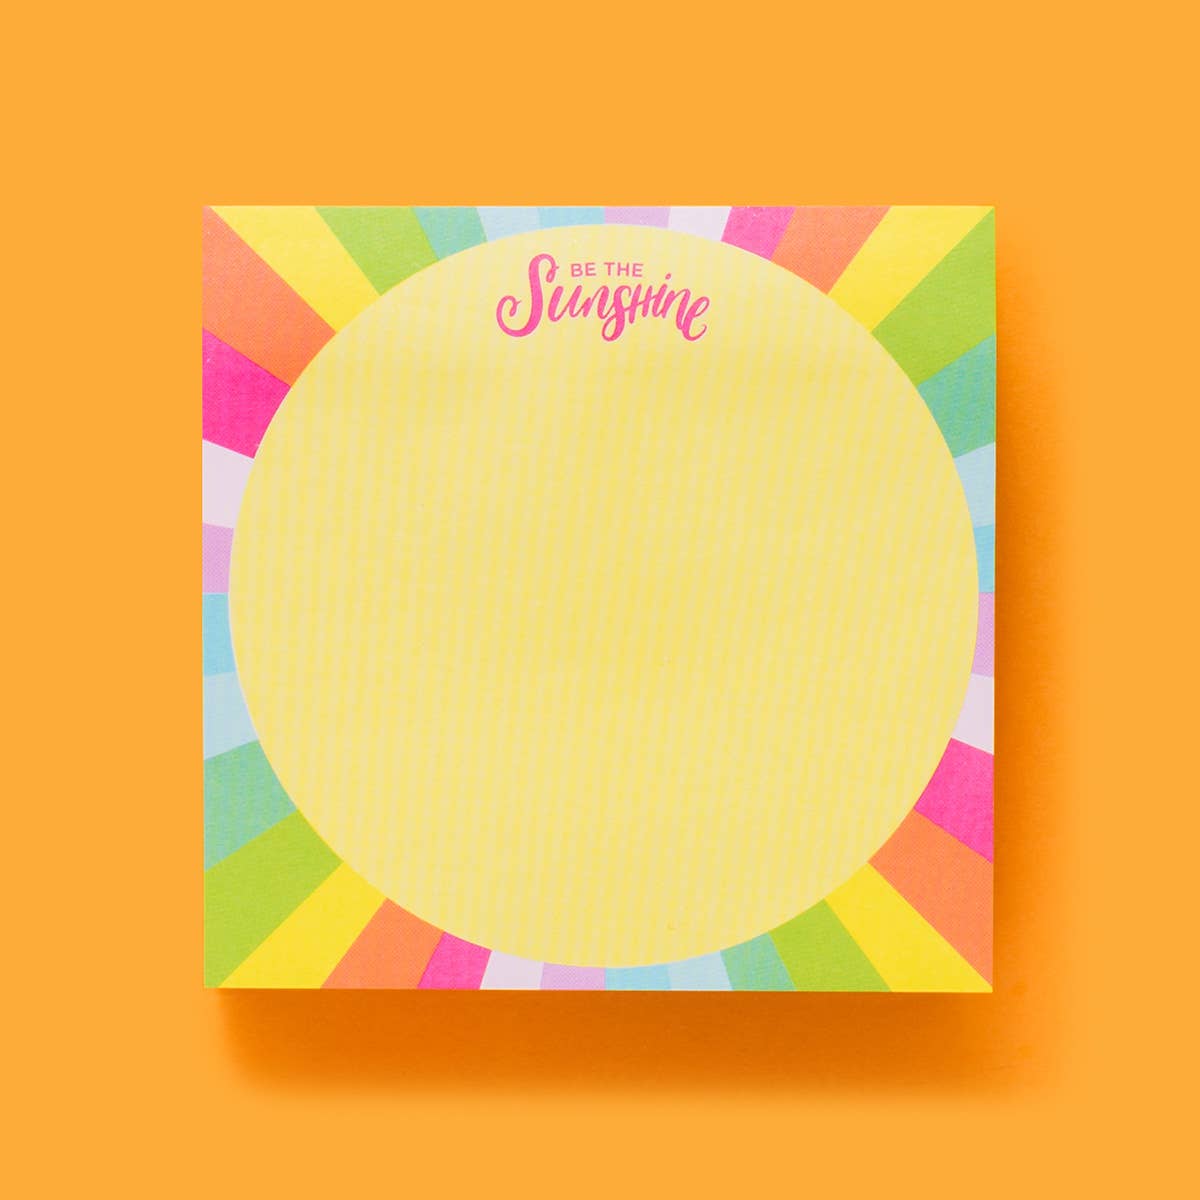 Sticky Notes Pad  "Be the Sunshine": Taylor Elliott Designs